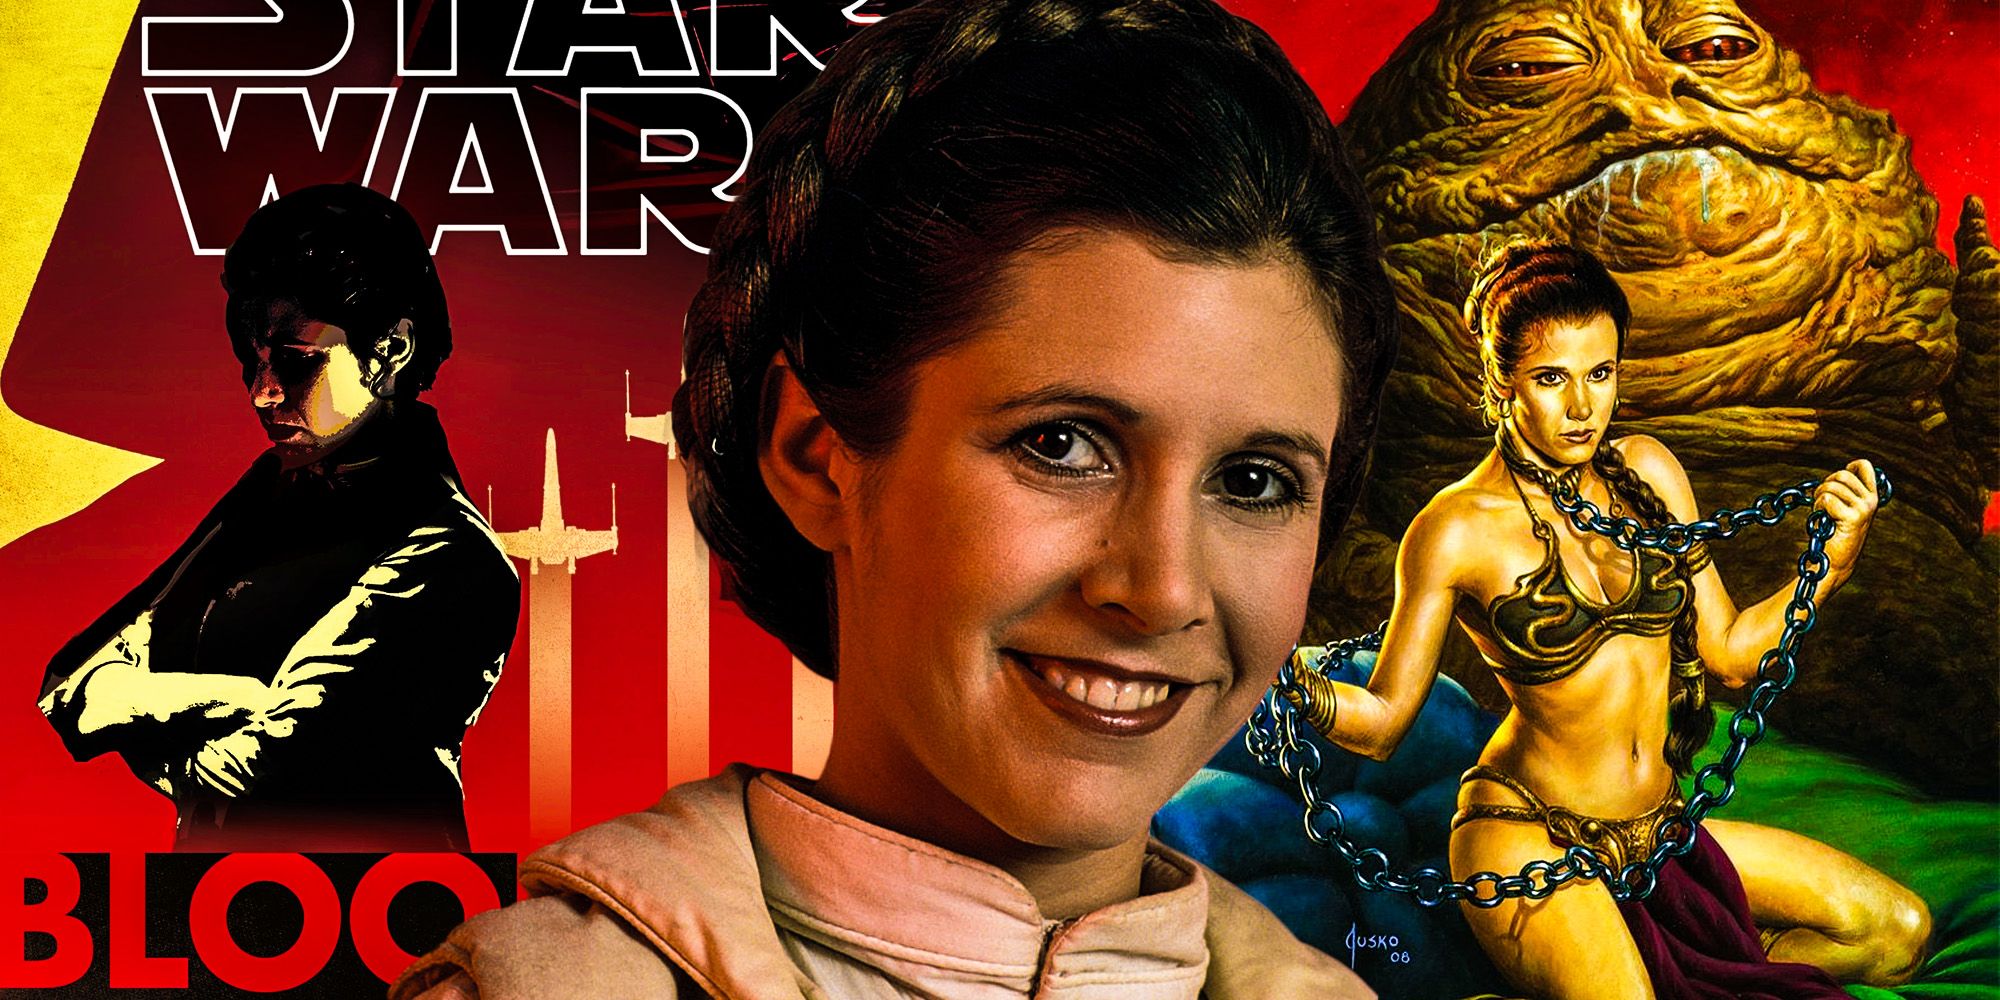 Princess Leia Secretly Used The Dark Side In Return Of The Jedi